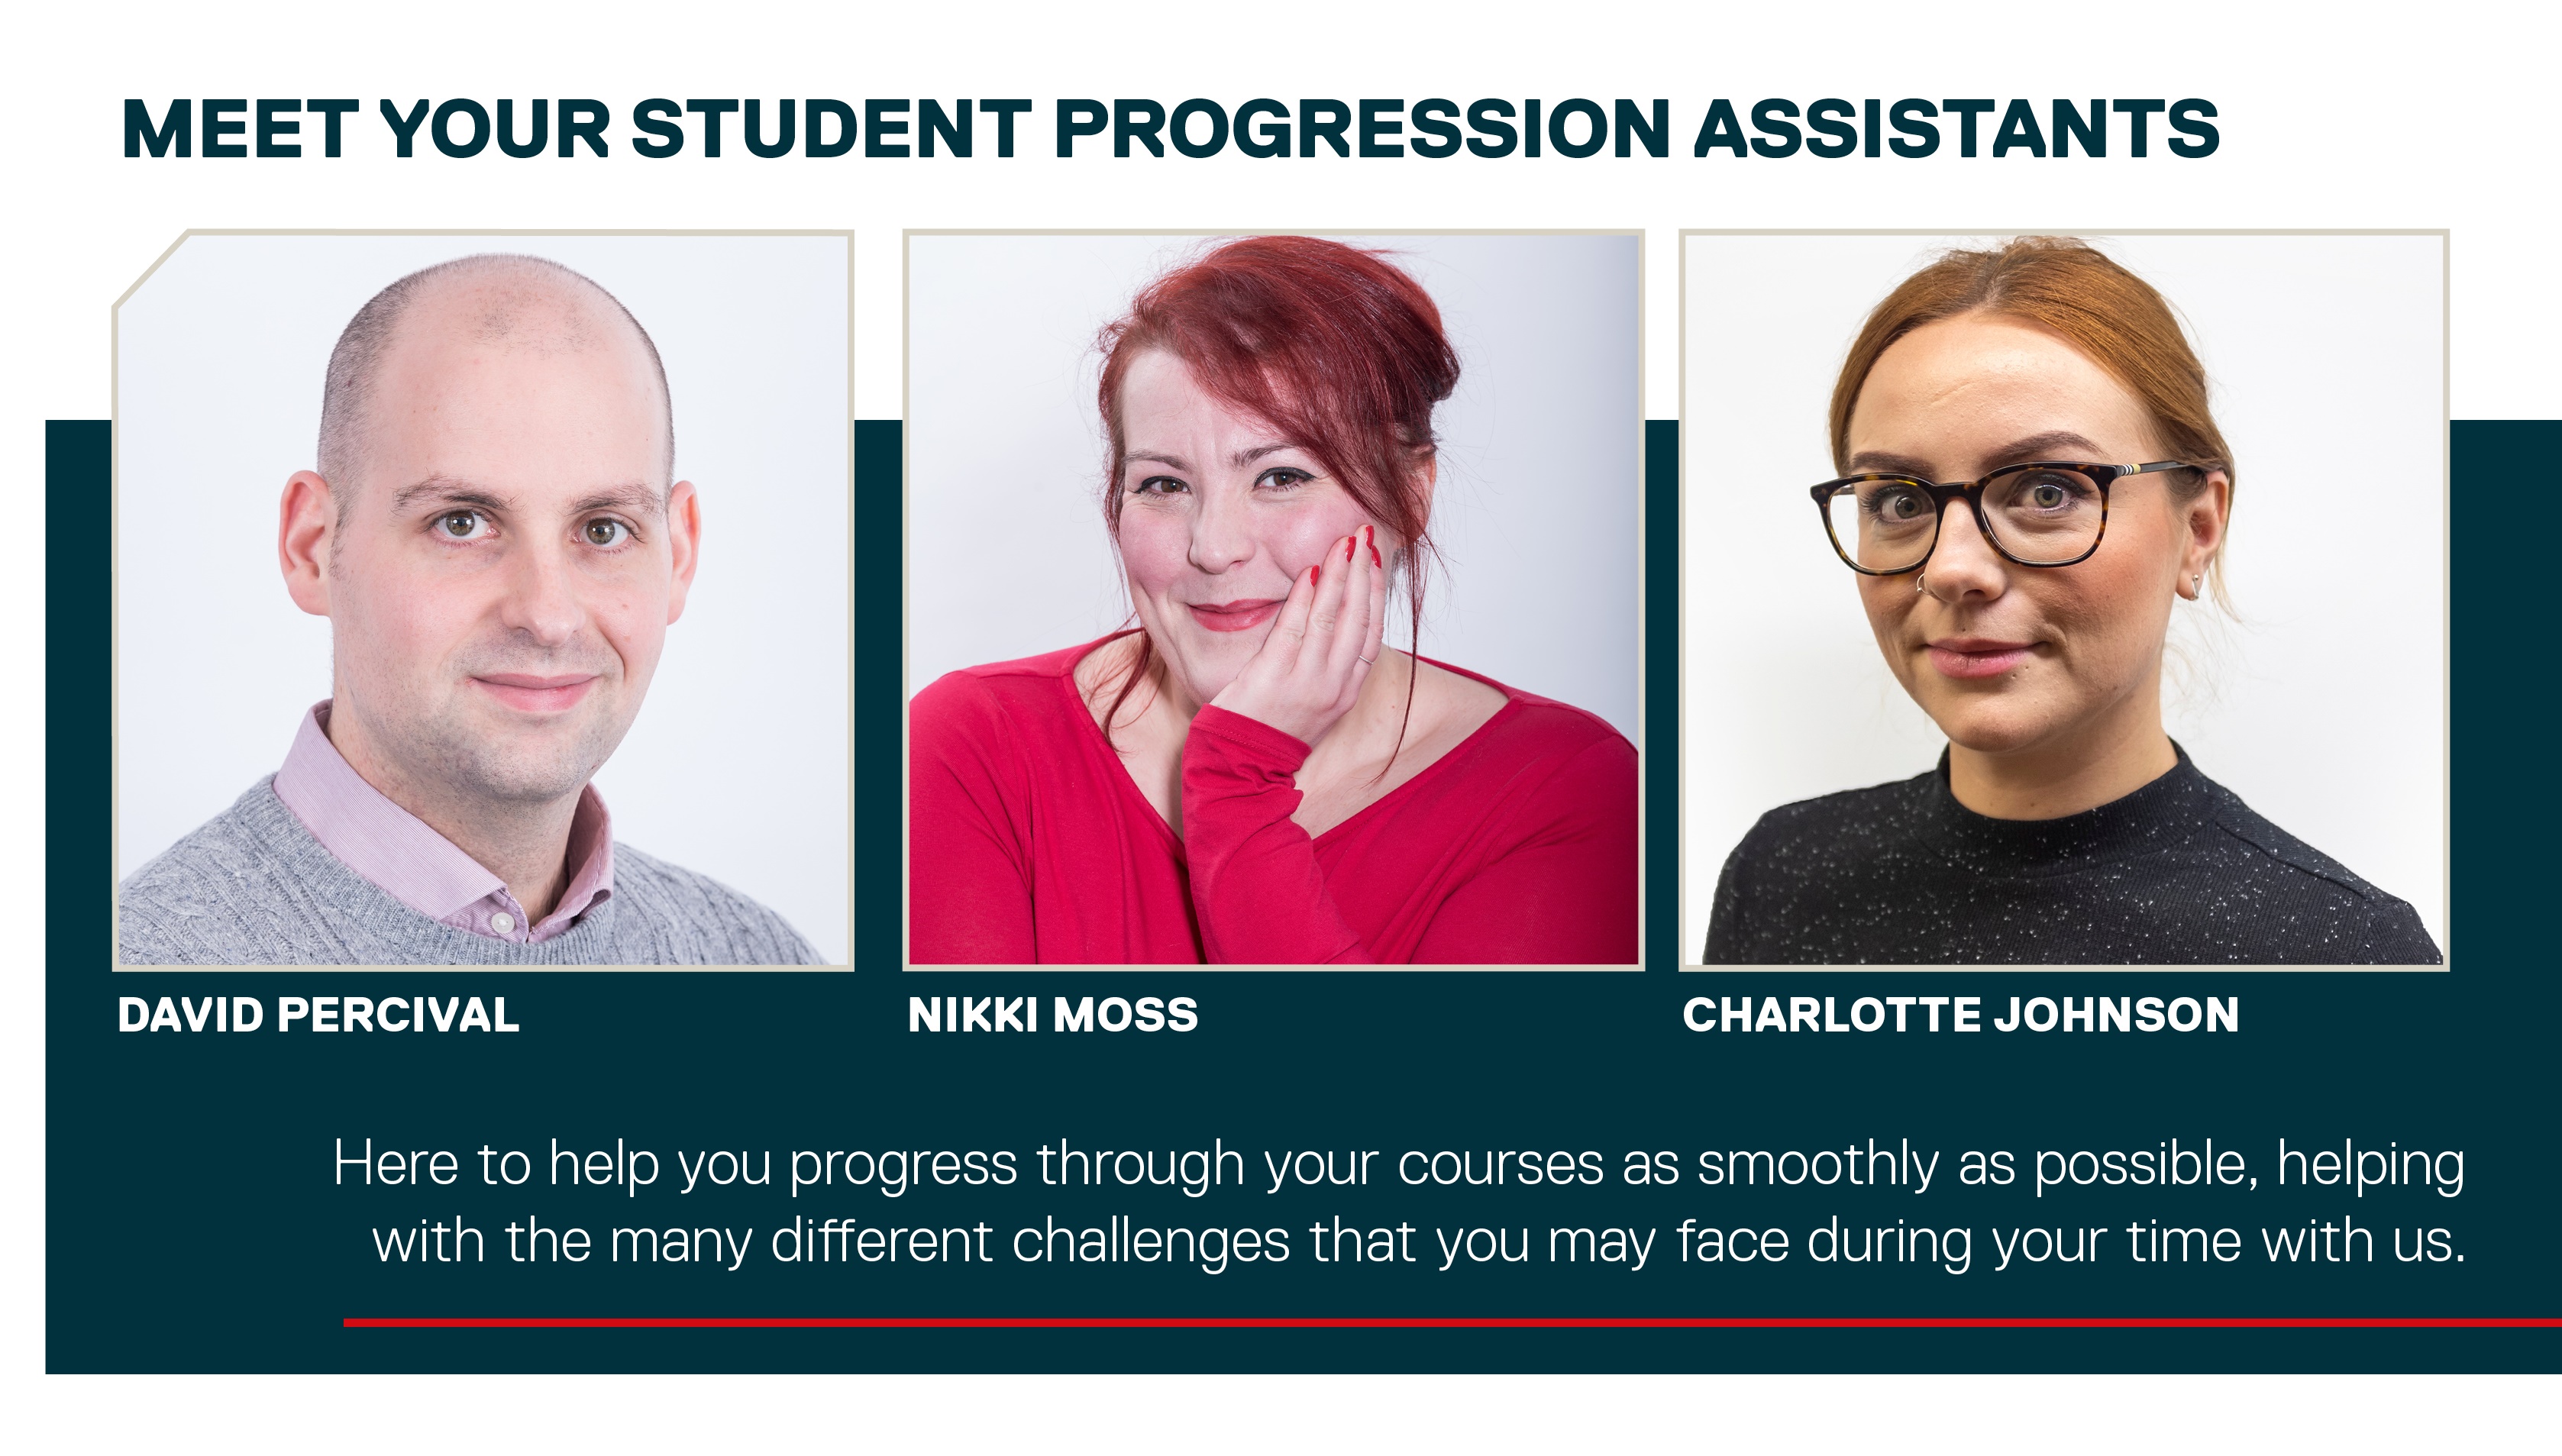 Meet your Student Progression Assistants